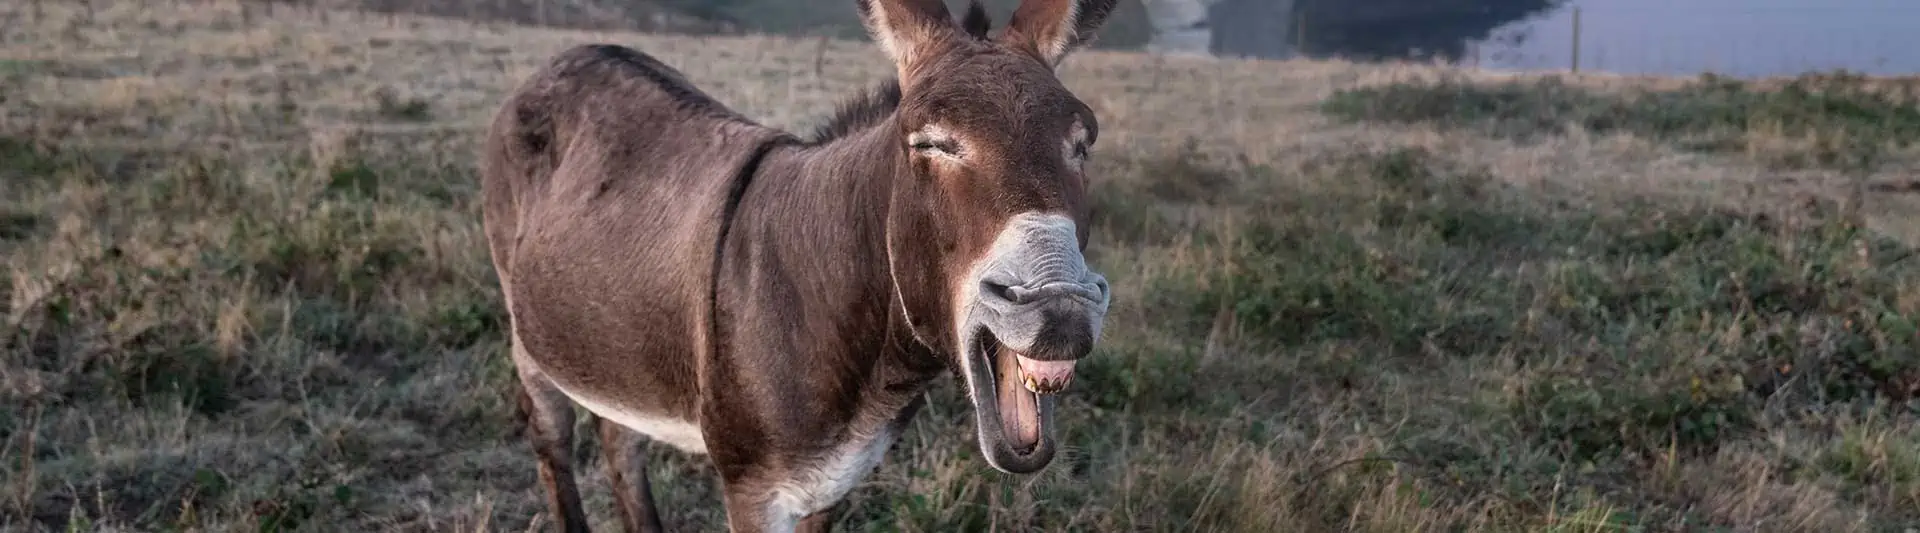 Do Donkeys Laugh?